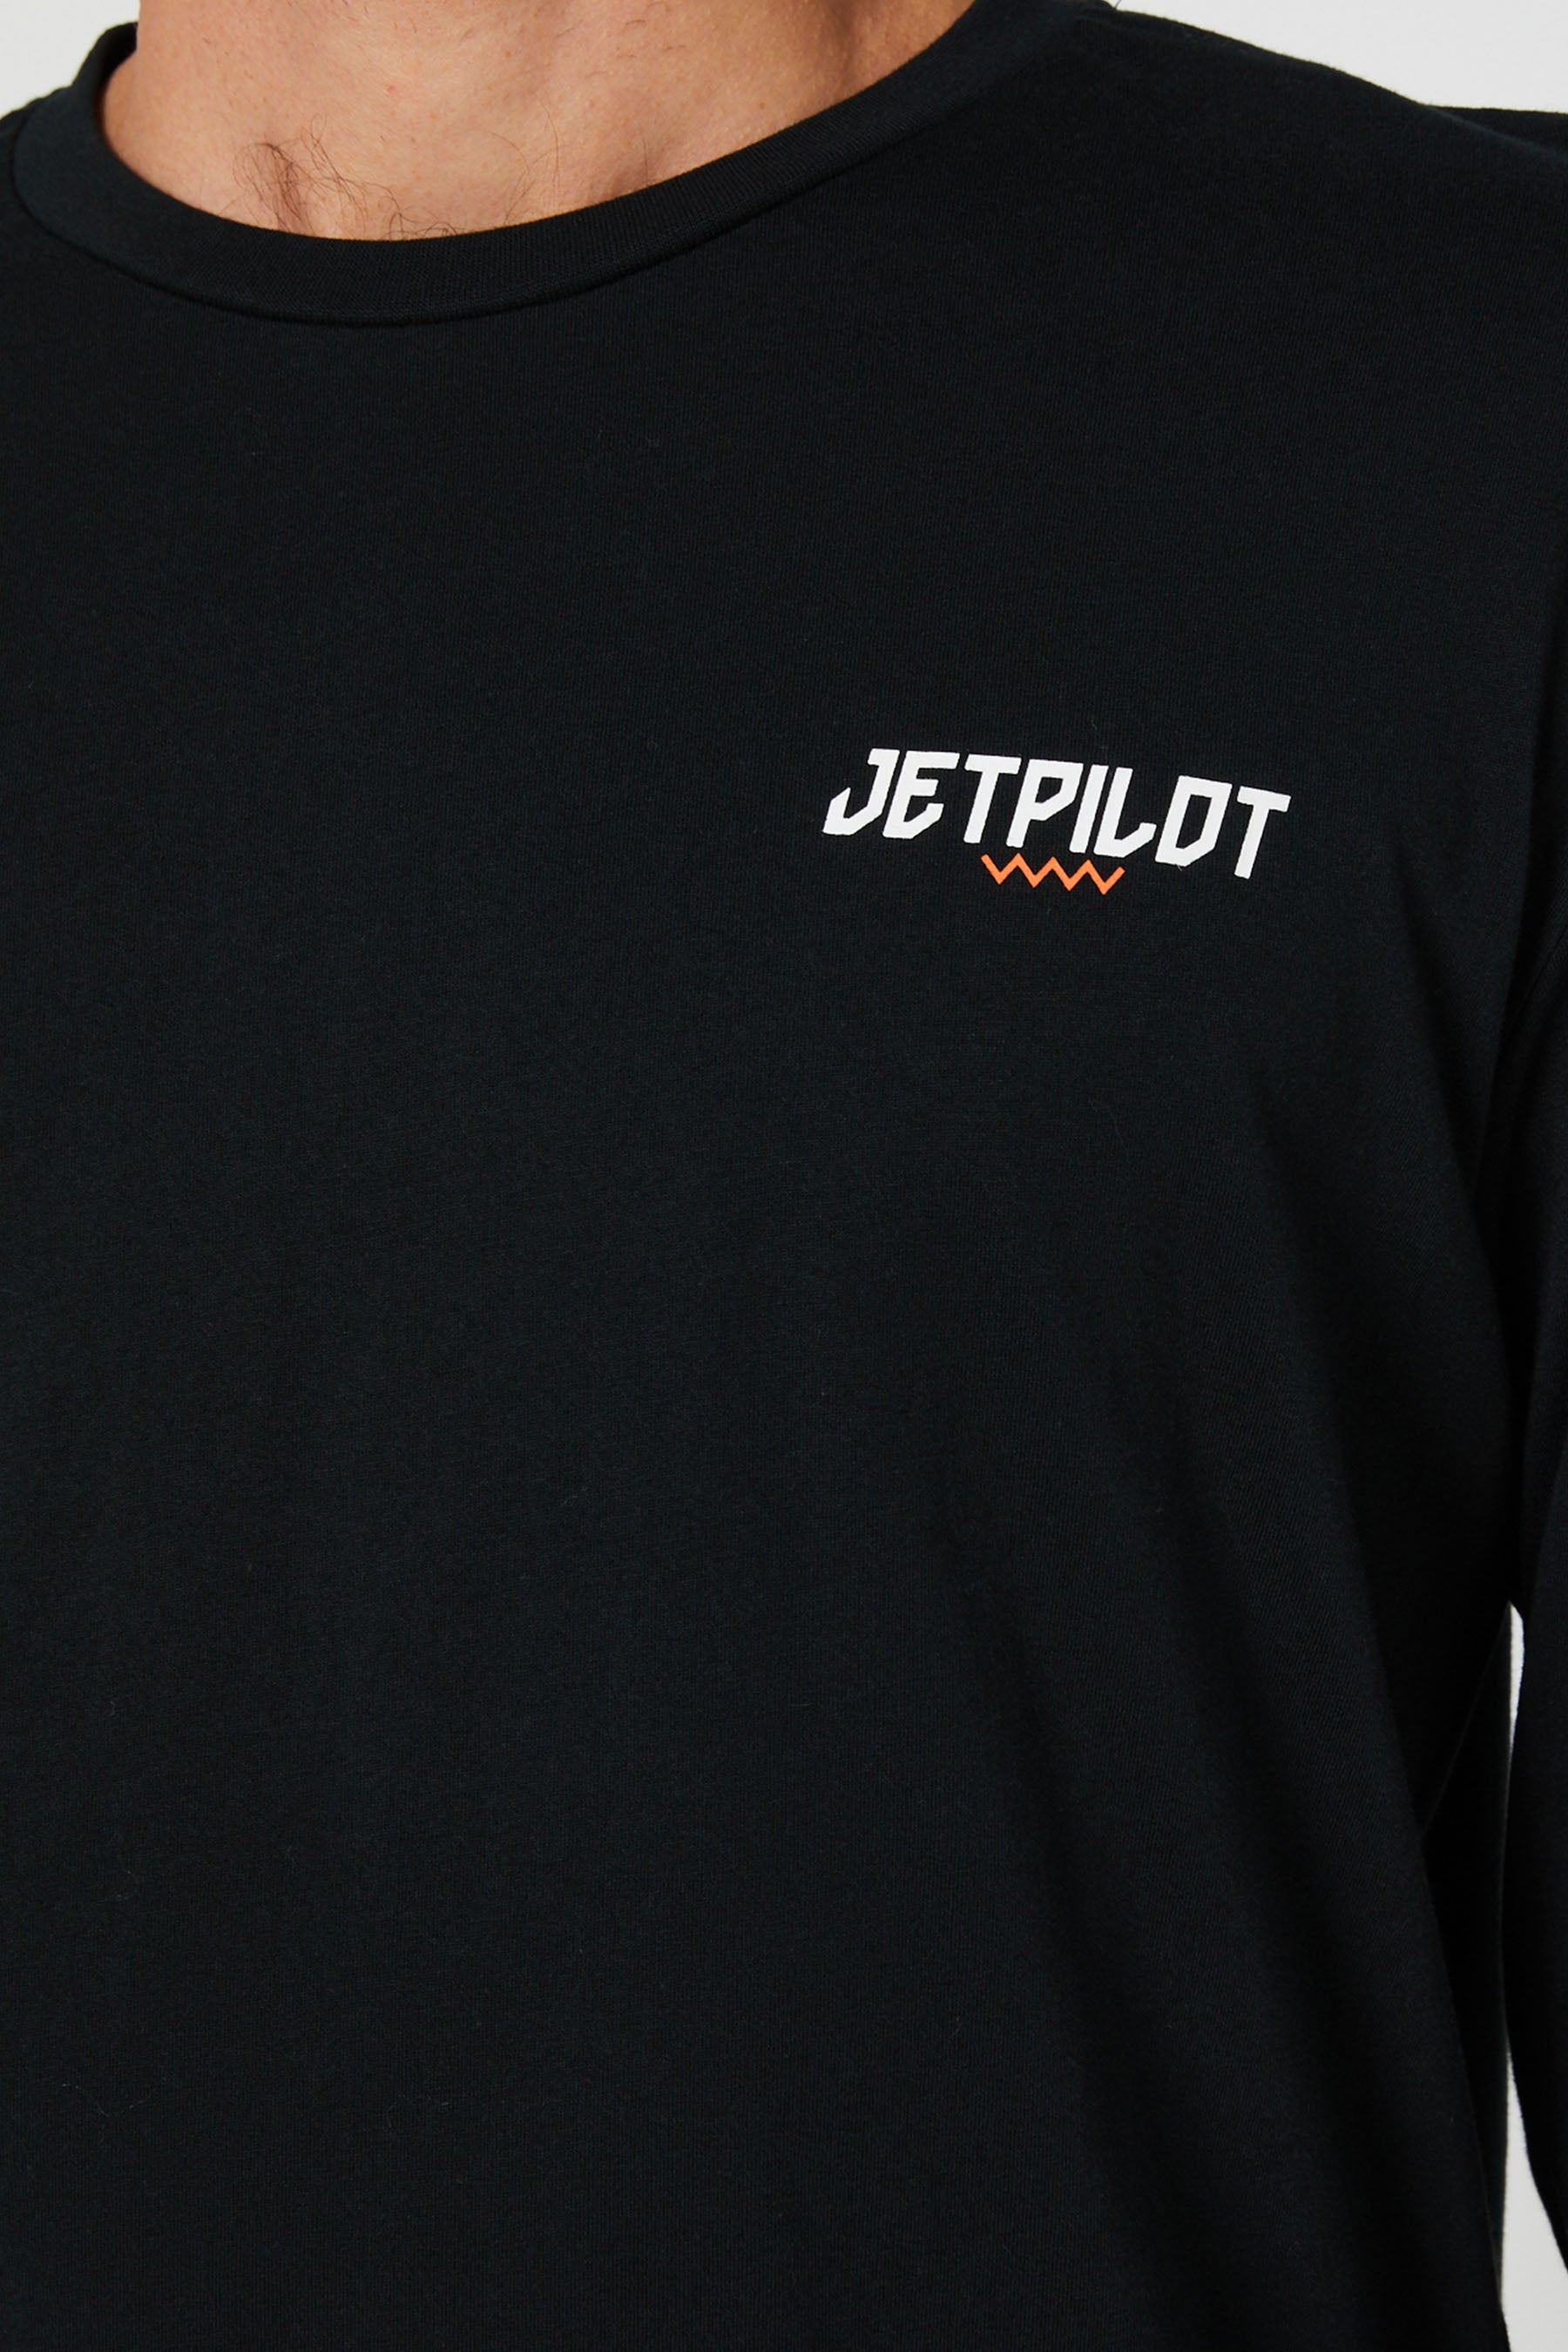 Jetpilot Friday Mens L/S Tee - Black